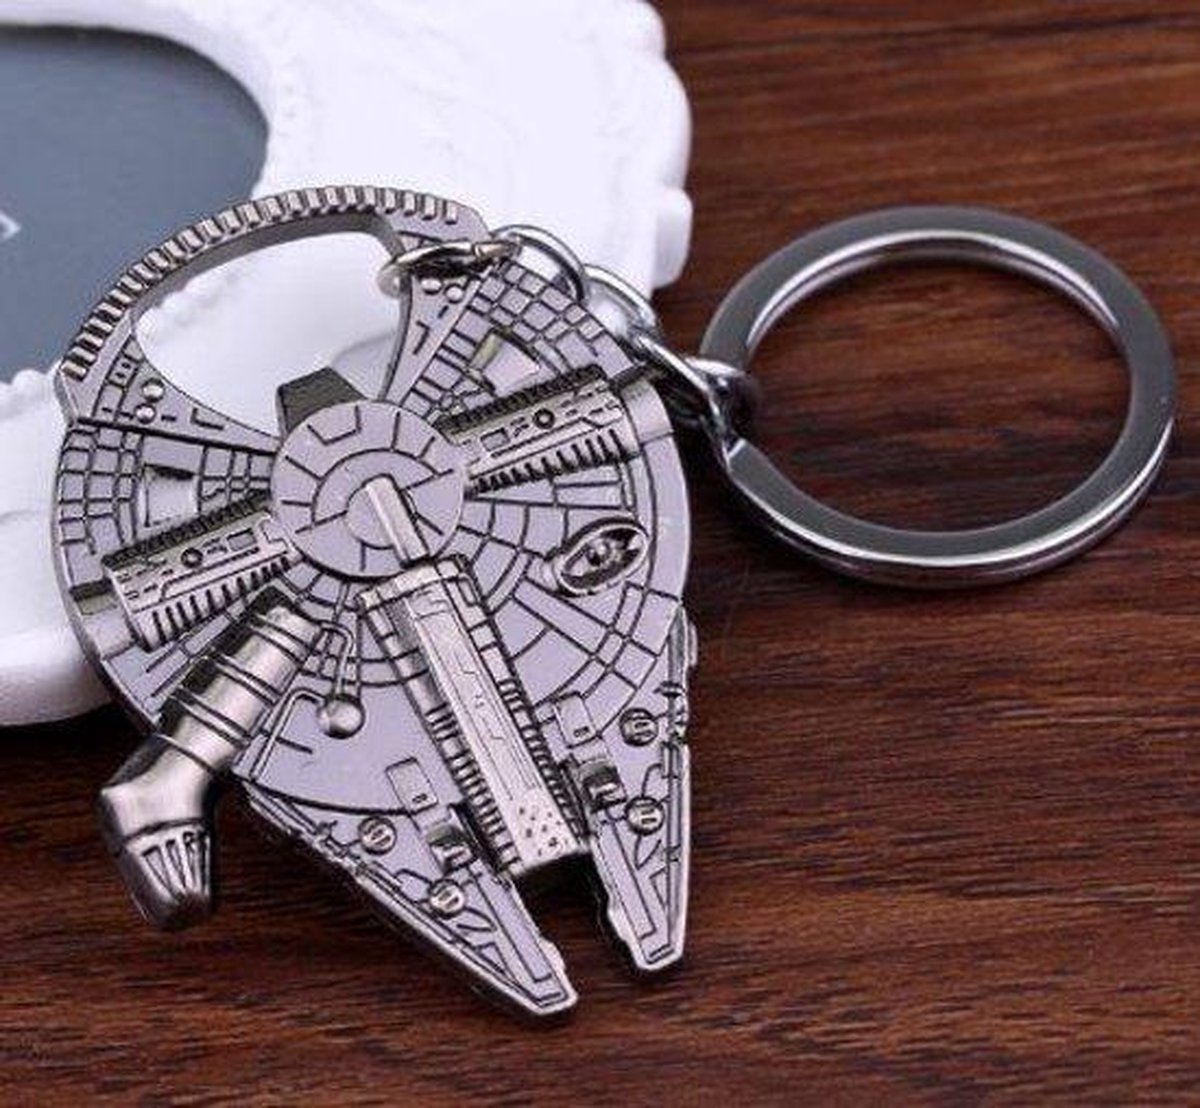 Star Wars Sleutelhanger - Millennium Falcon Sleutelhanger - Flesopener - Bottle opener - Star Wars Keychain - z.p.c.